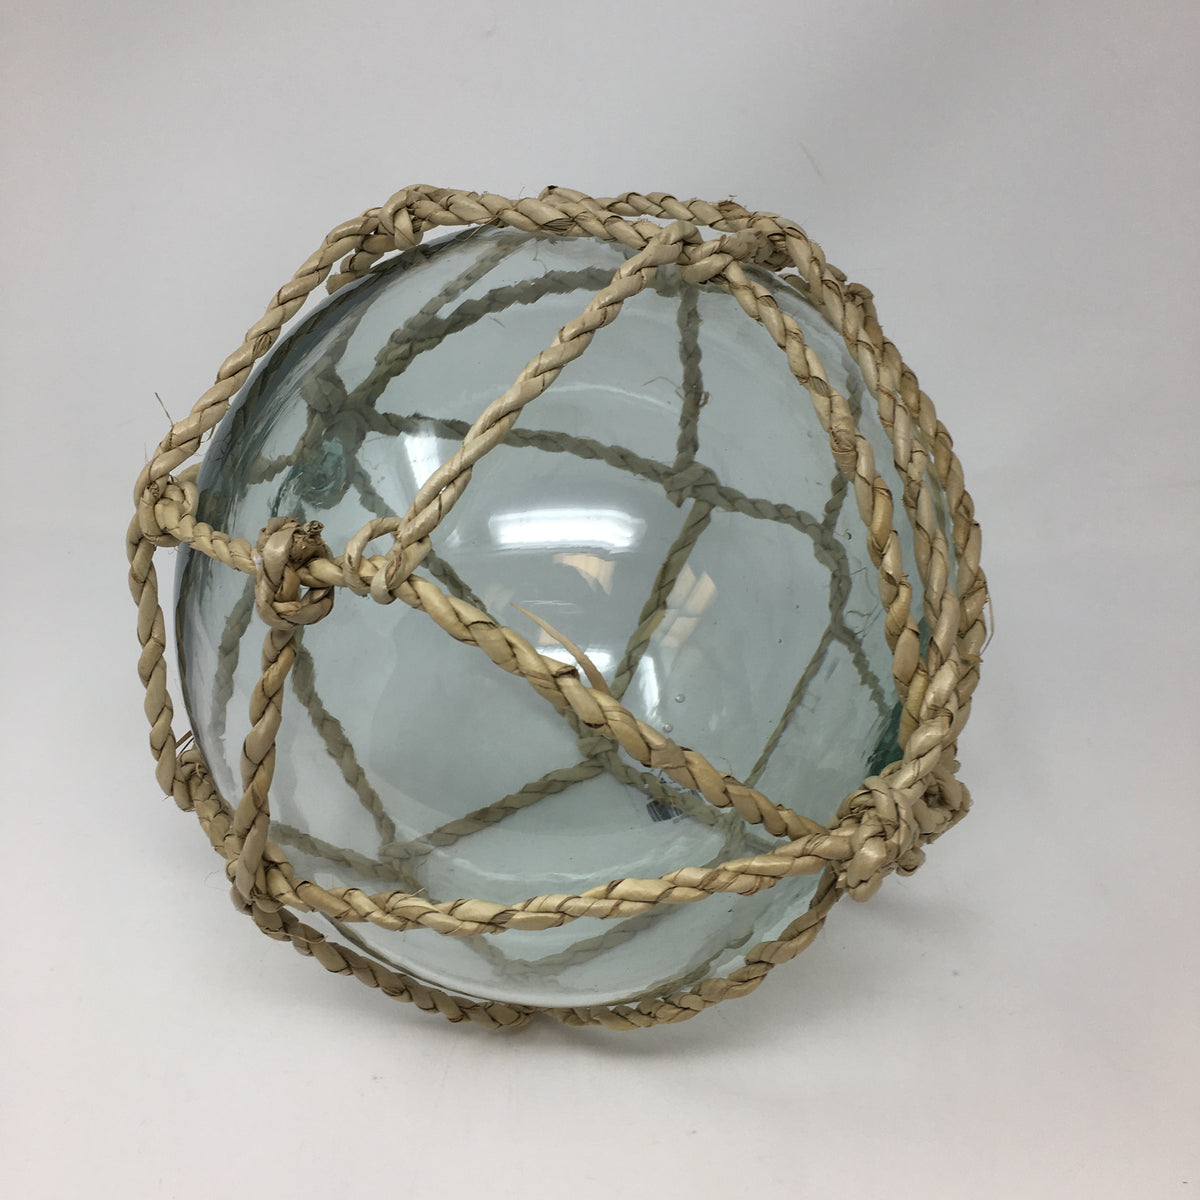 Glass Ball w/ Buri Rope Weave